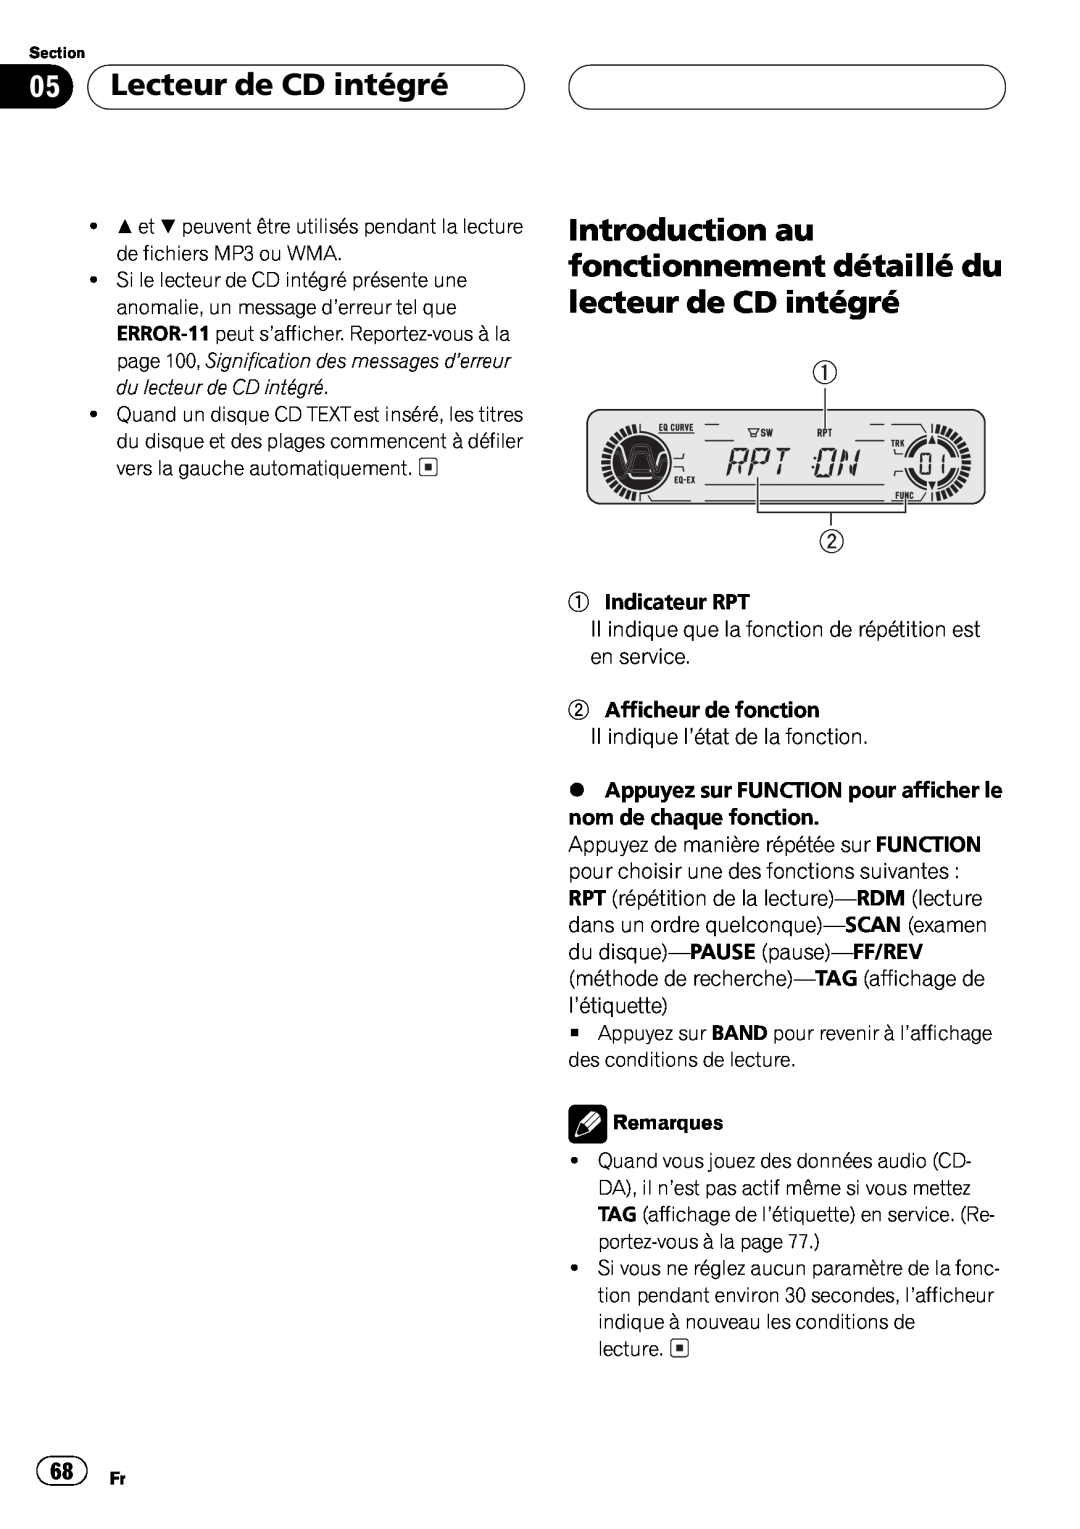 Pioneer DEH-P550MP operation manual 